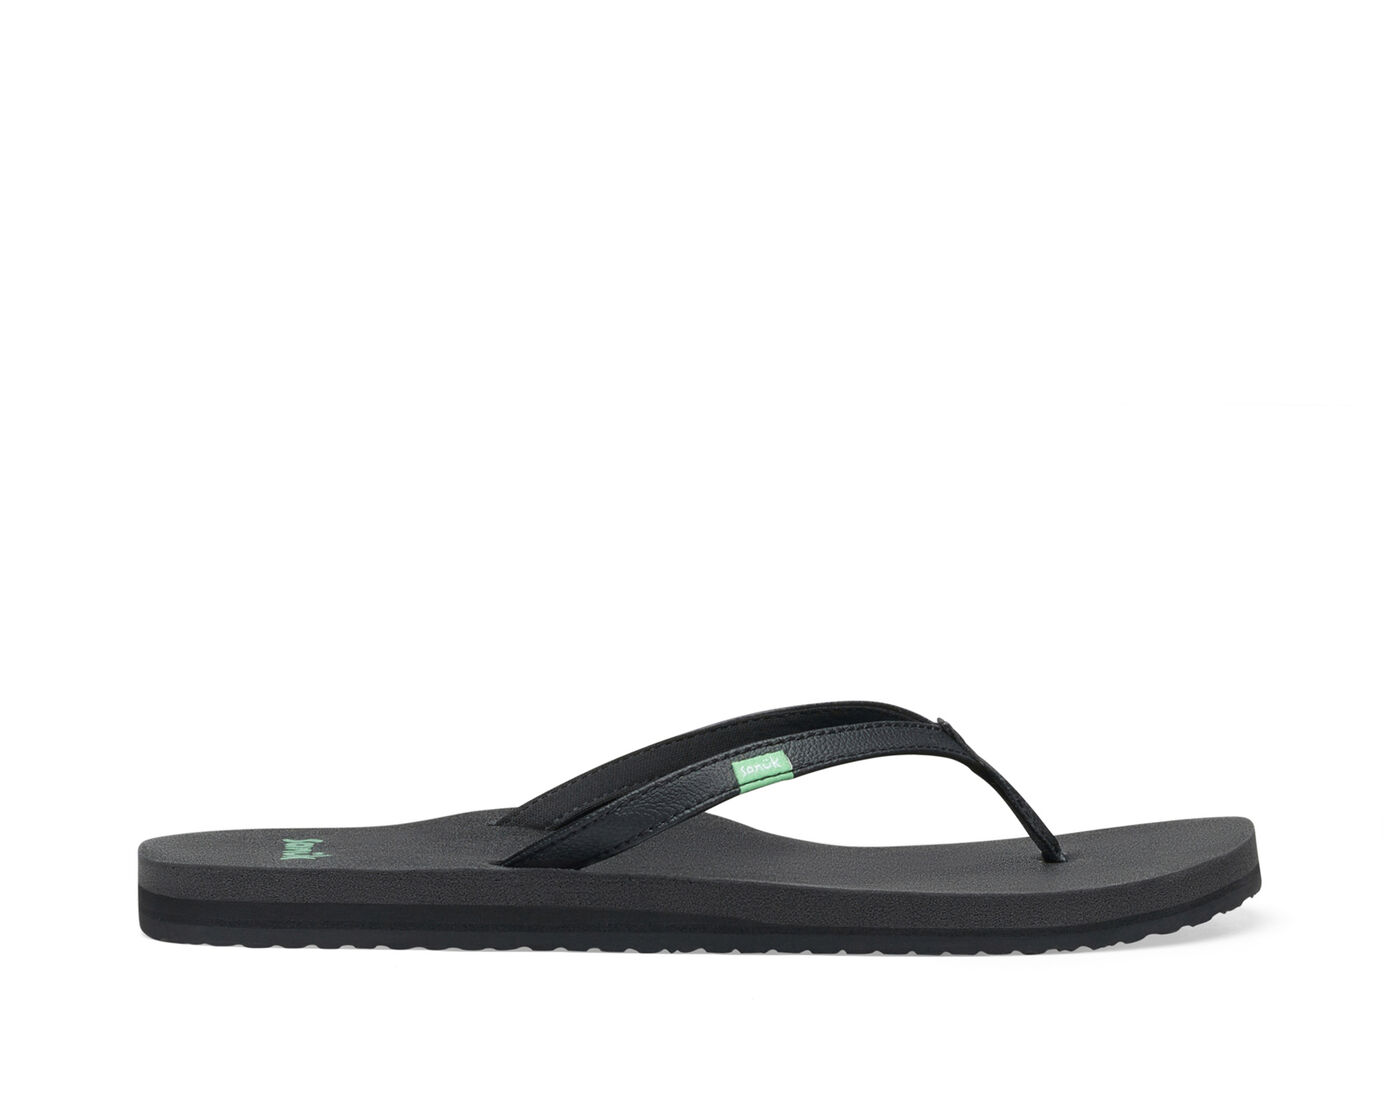 Buy New Sanuk Yoga Spree Comfy Flip Flops Sandals Women's Size 11